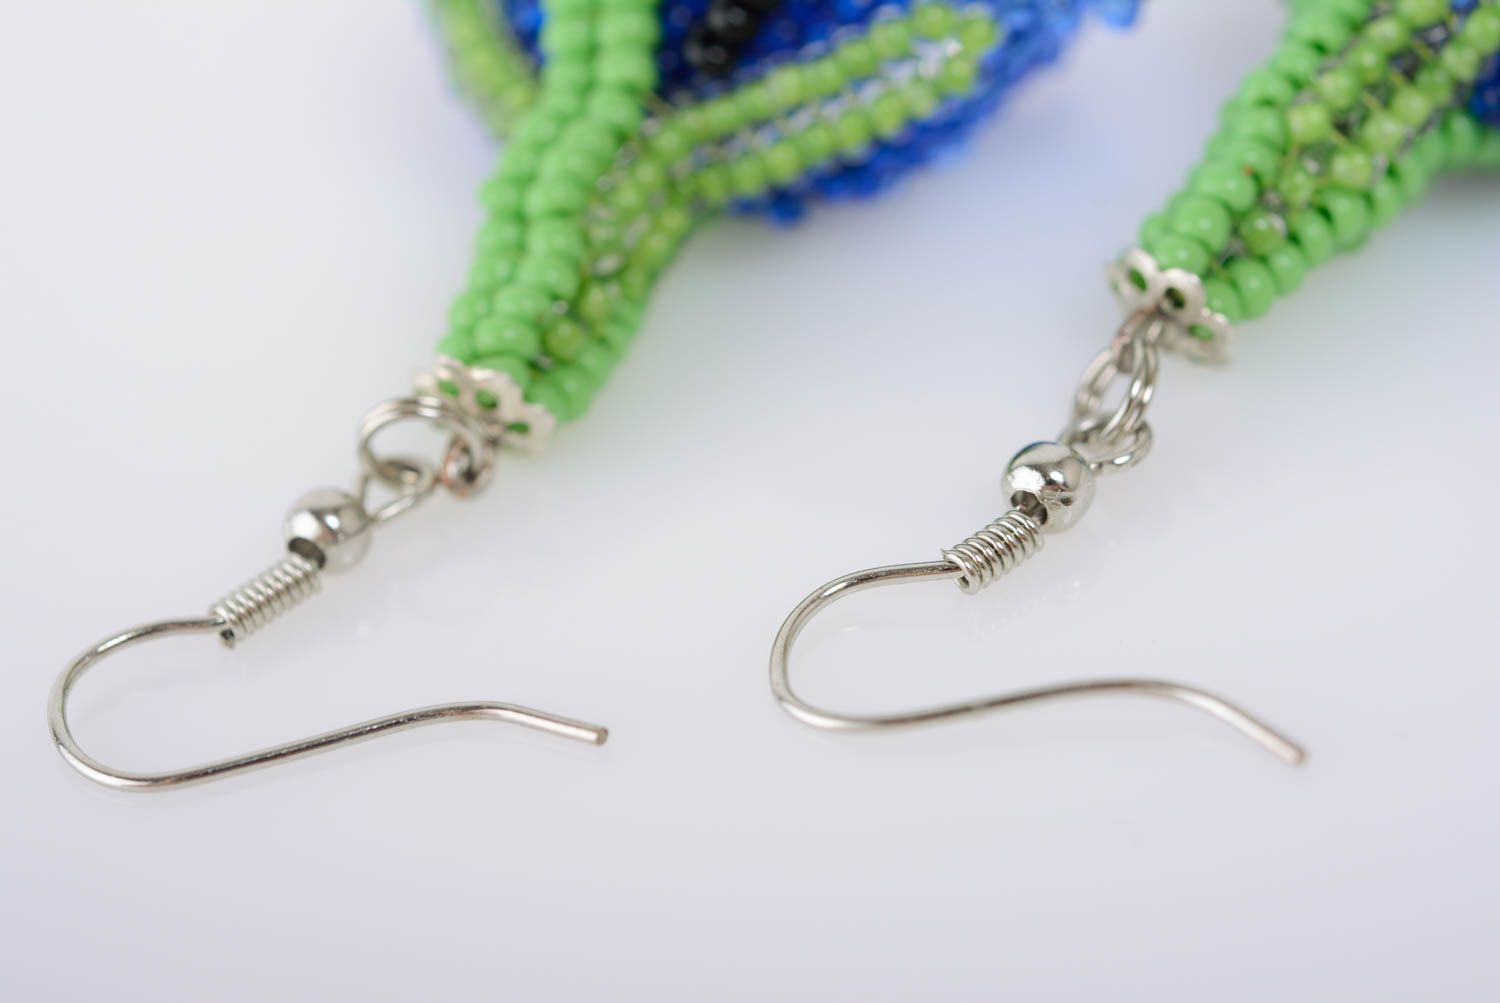 Beaded handmade earrings flowers blue with green beautiful summer accessory photo 5